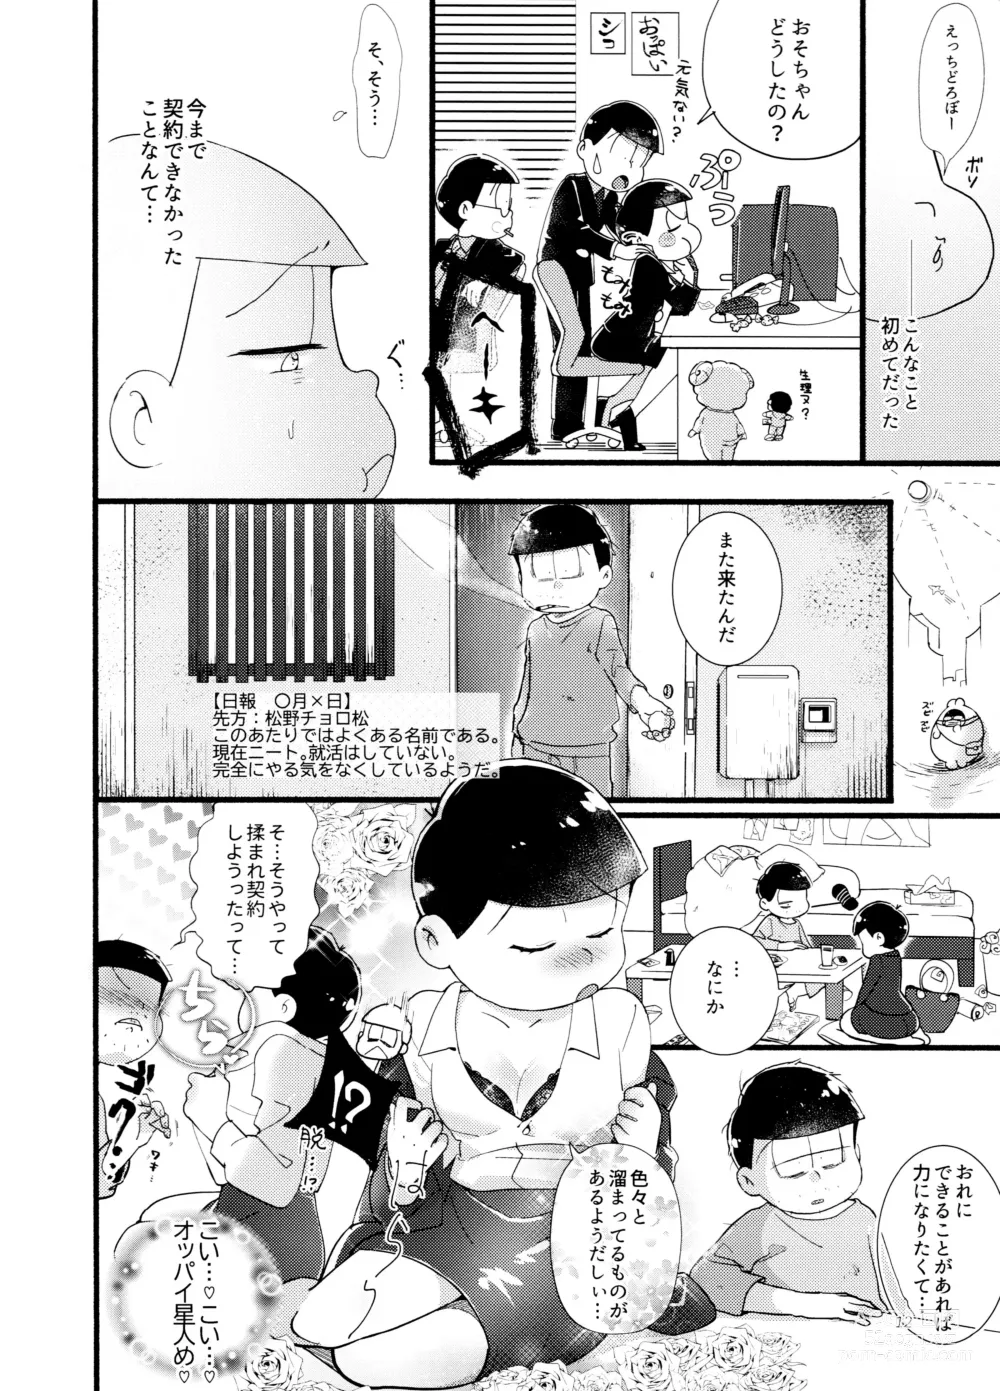 Page 12 of doujinshi Momare Keiyaku